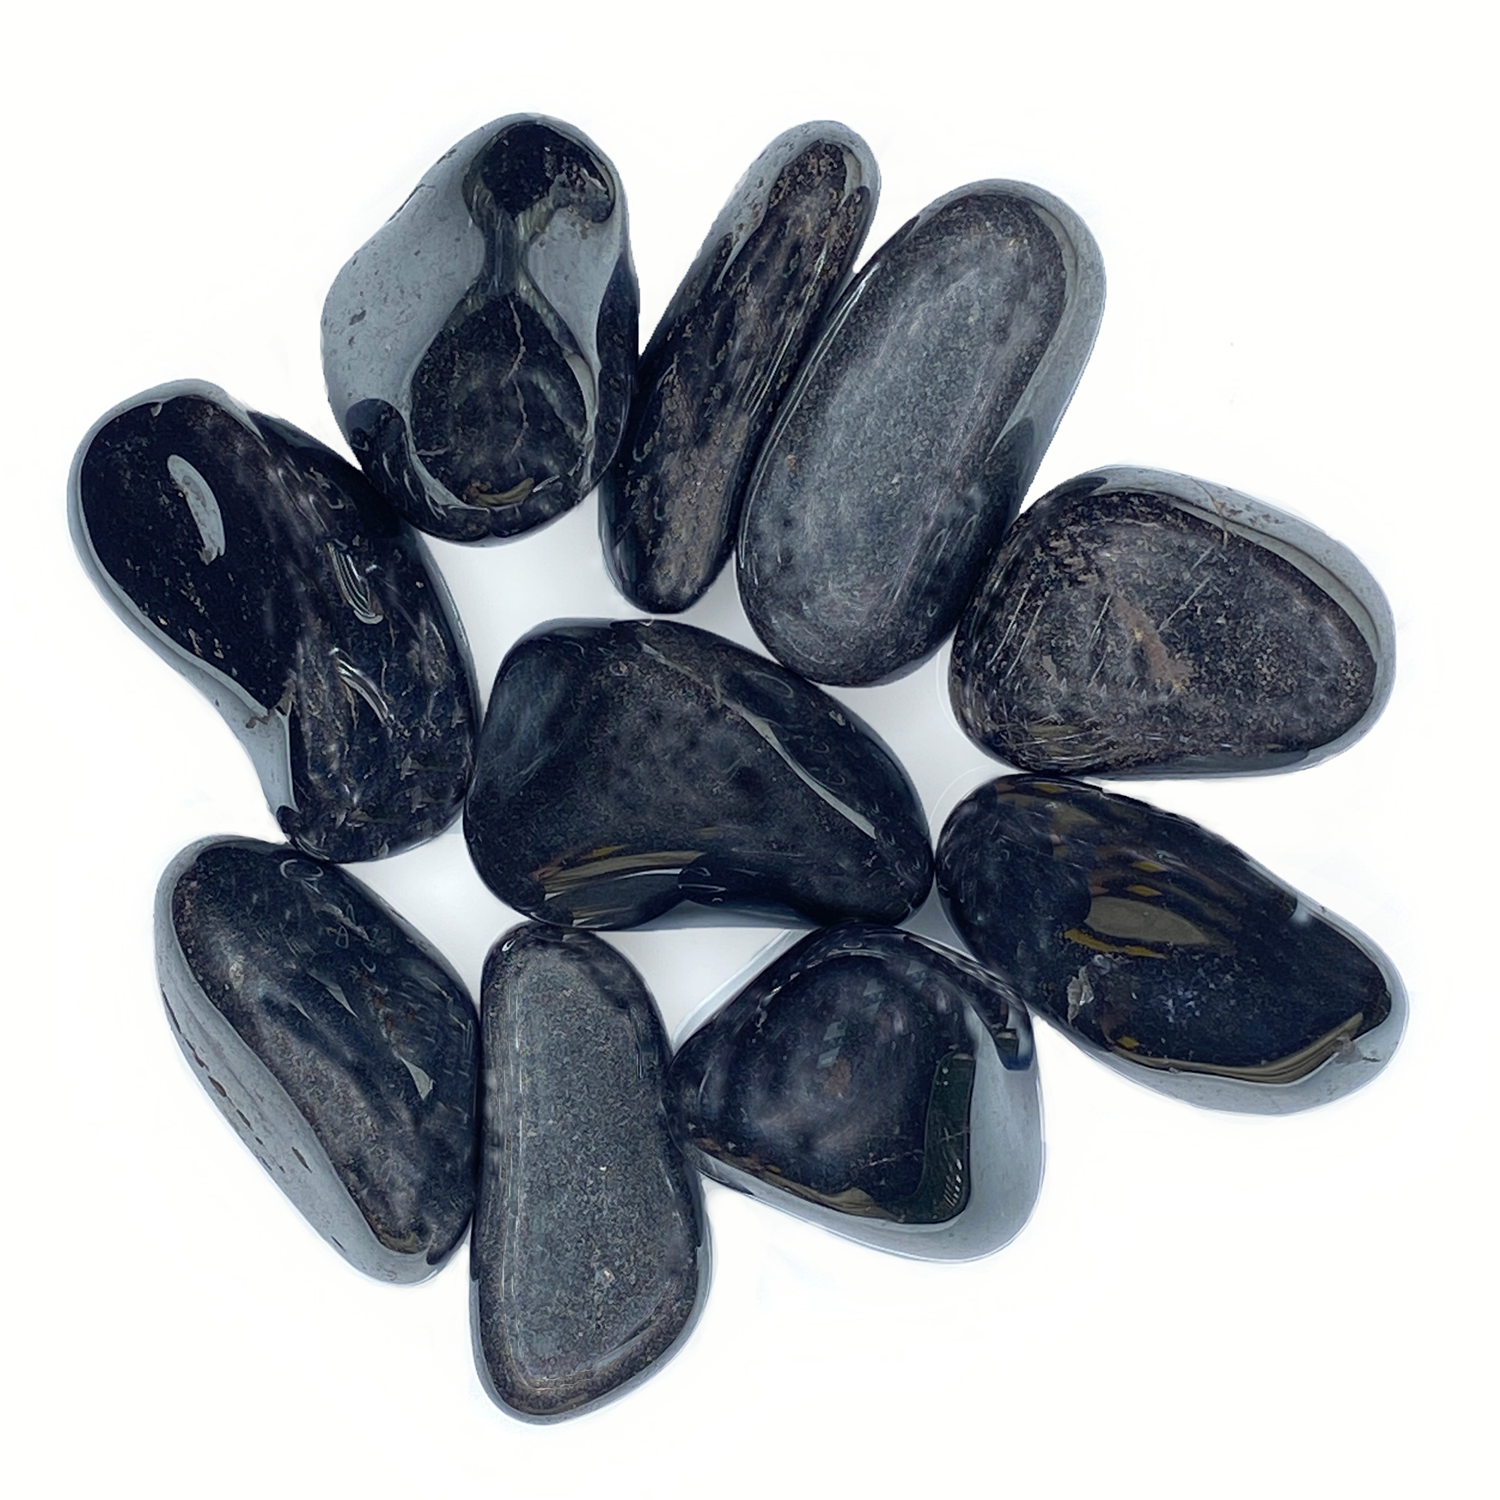 Bulk Tumbled Stone - Large - Black Hematite from Brazil